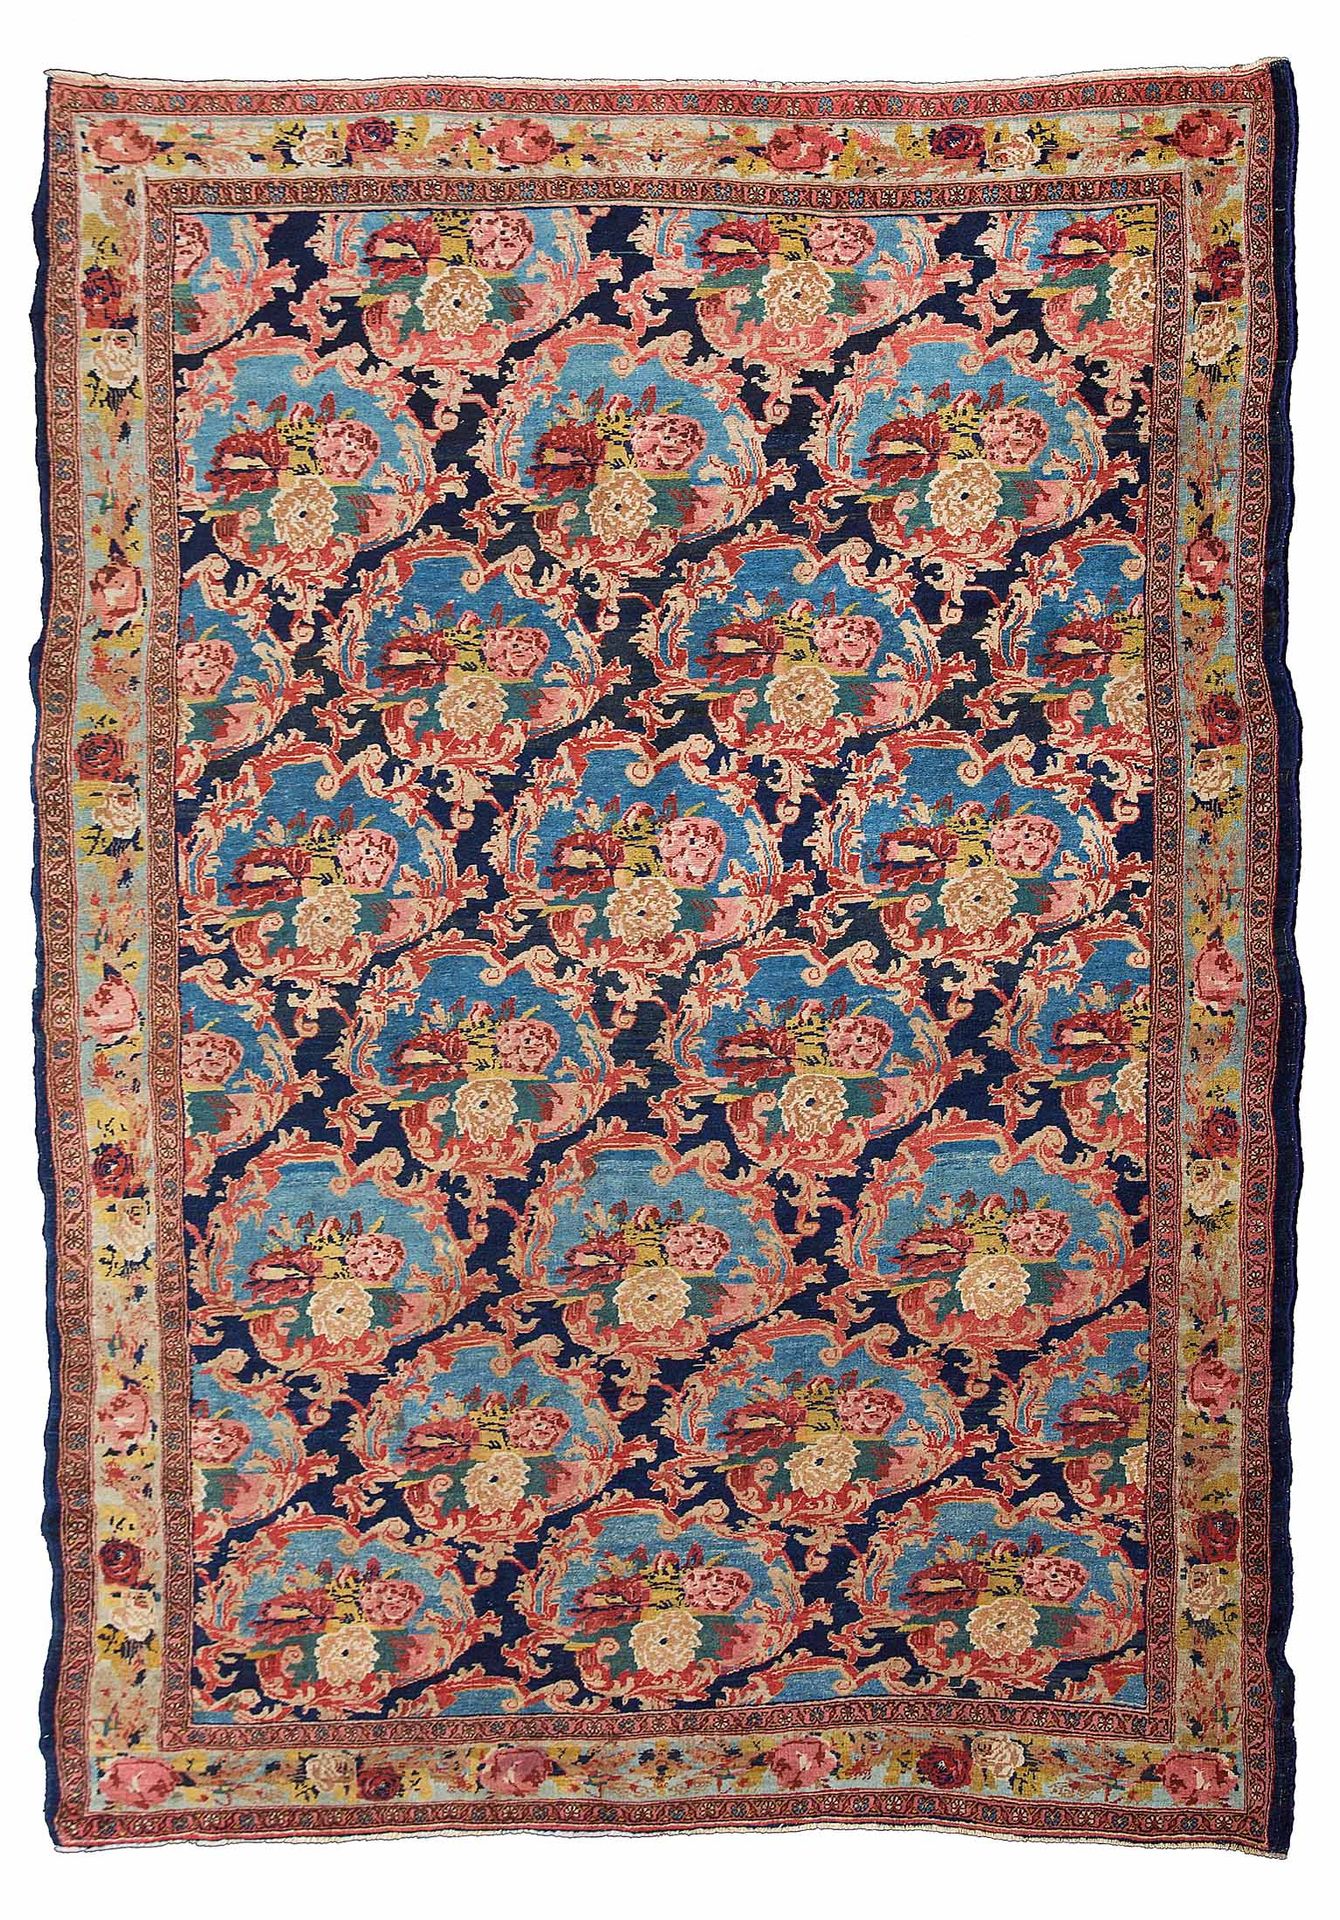 Null Original BIDJAR carpet (Persia), late 19th century
Dimensions : 205 x 142cm&hellip;